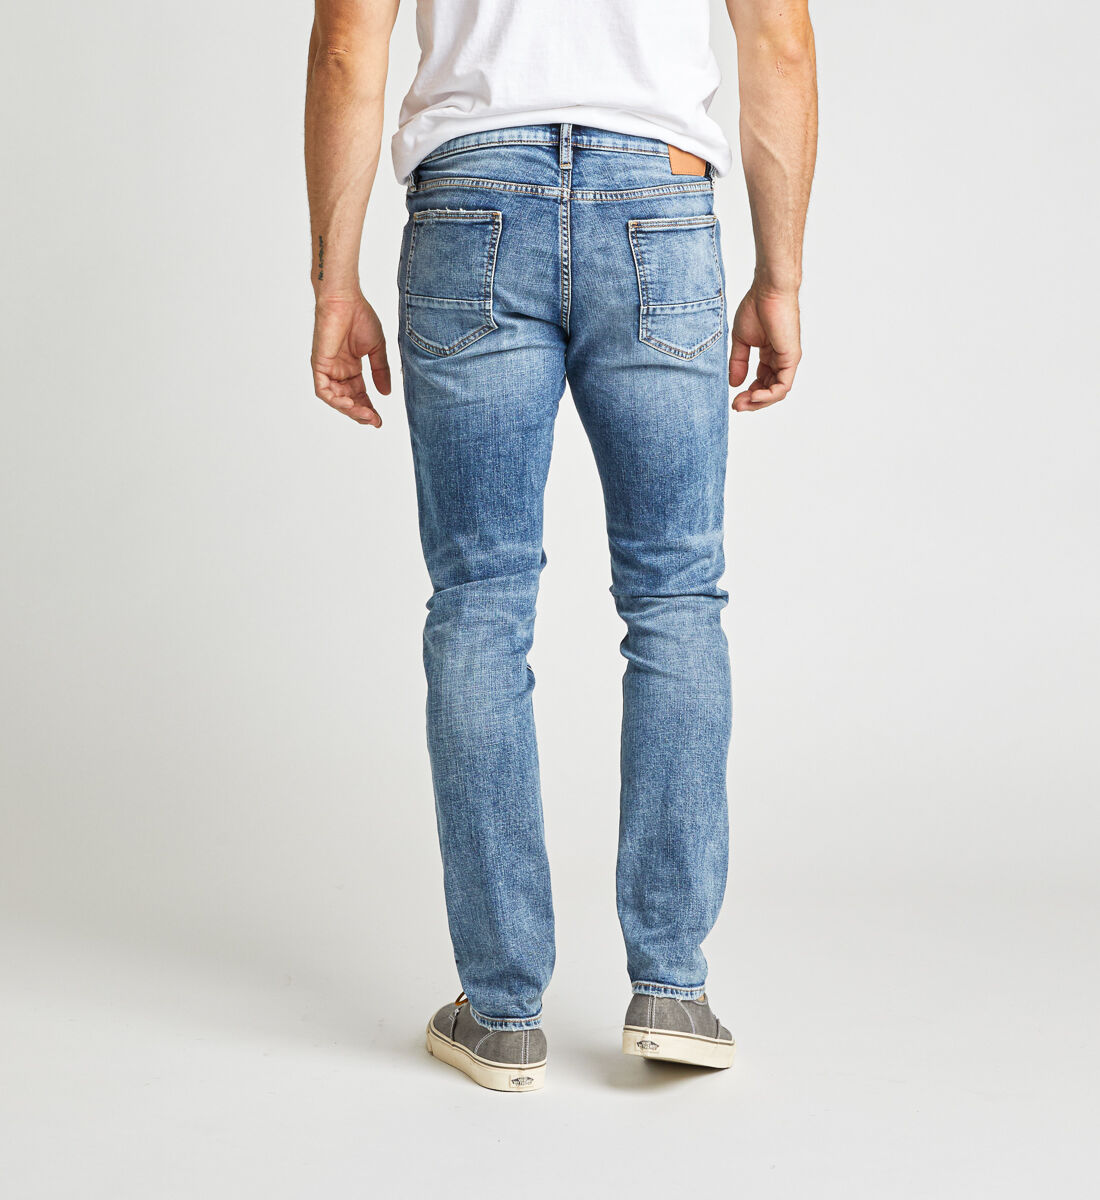 silver jeans online